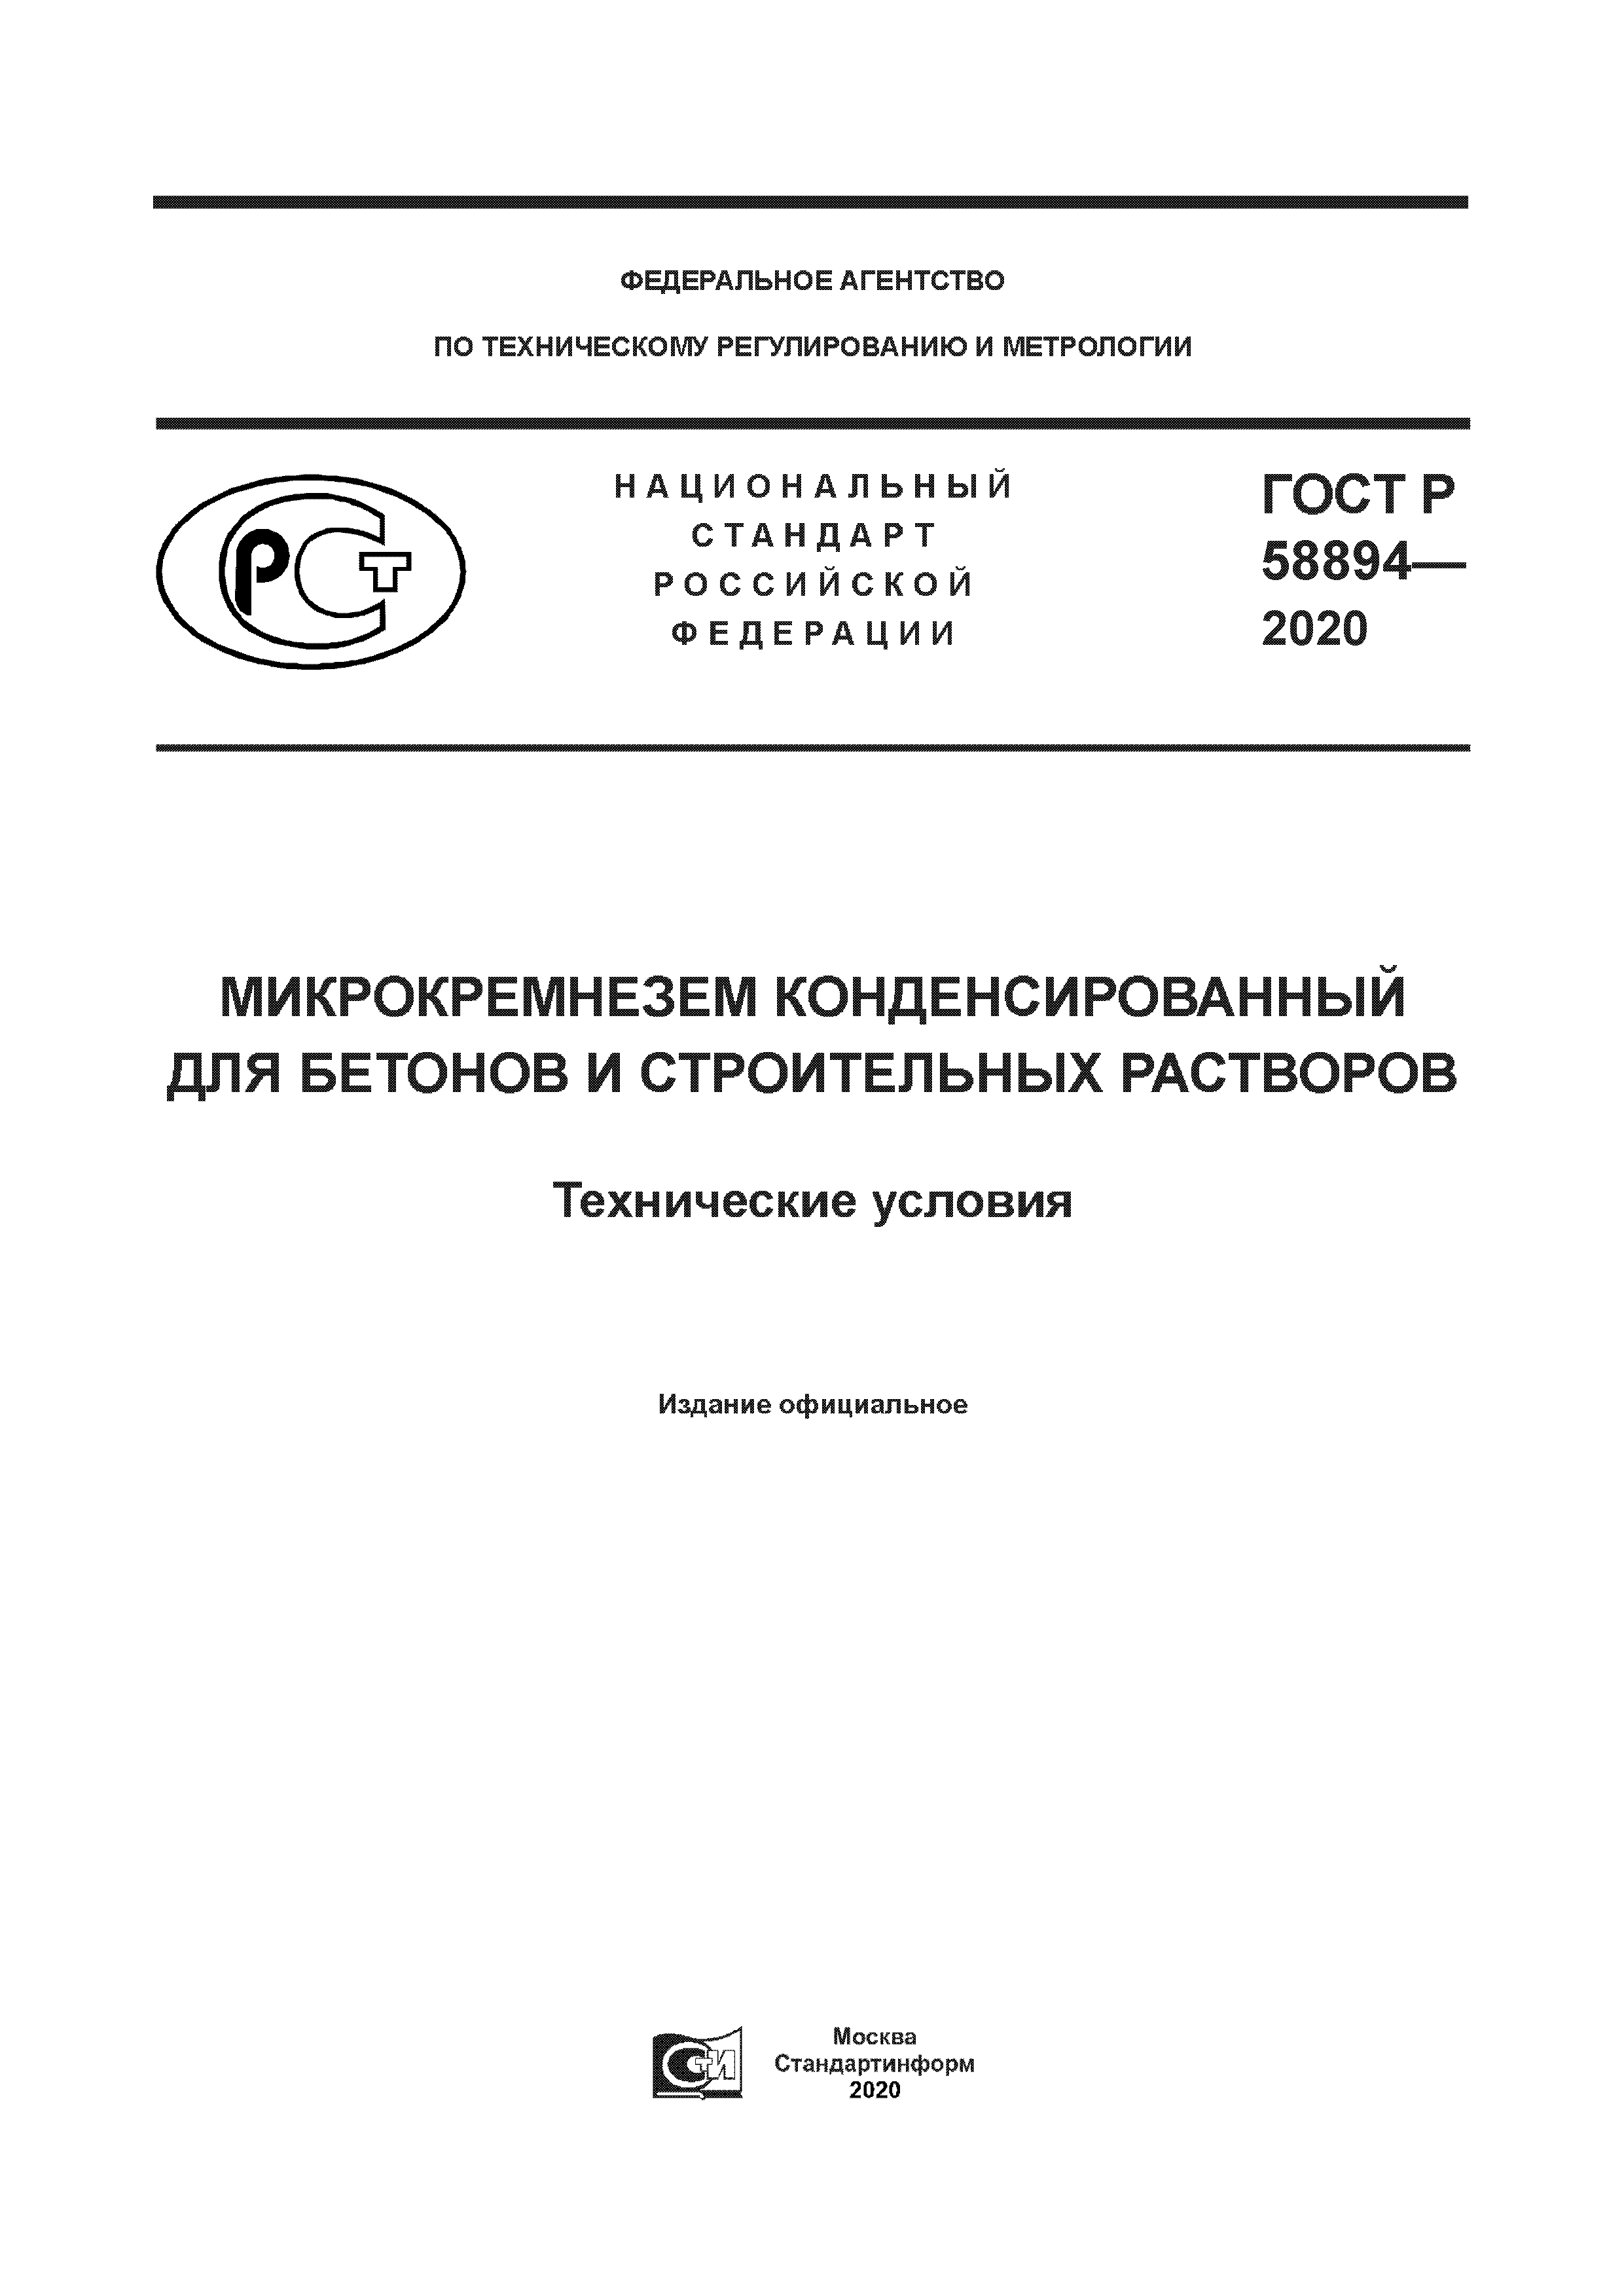 ГОСТ Р 58894-2020